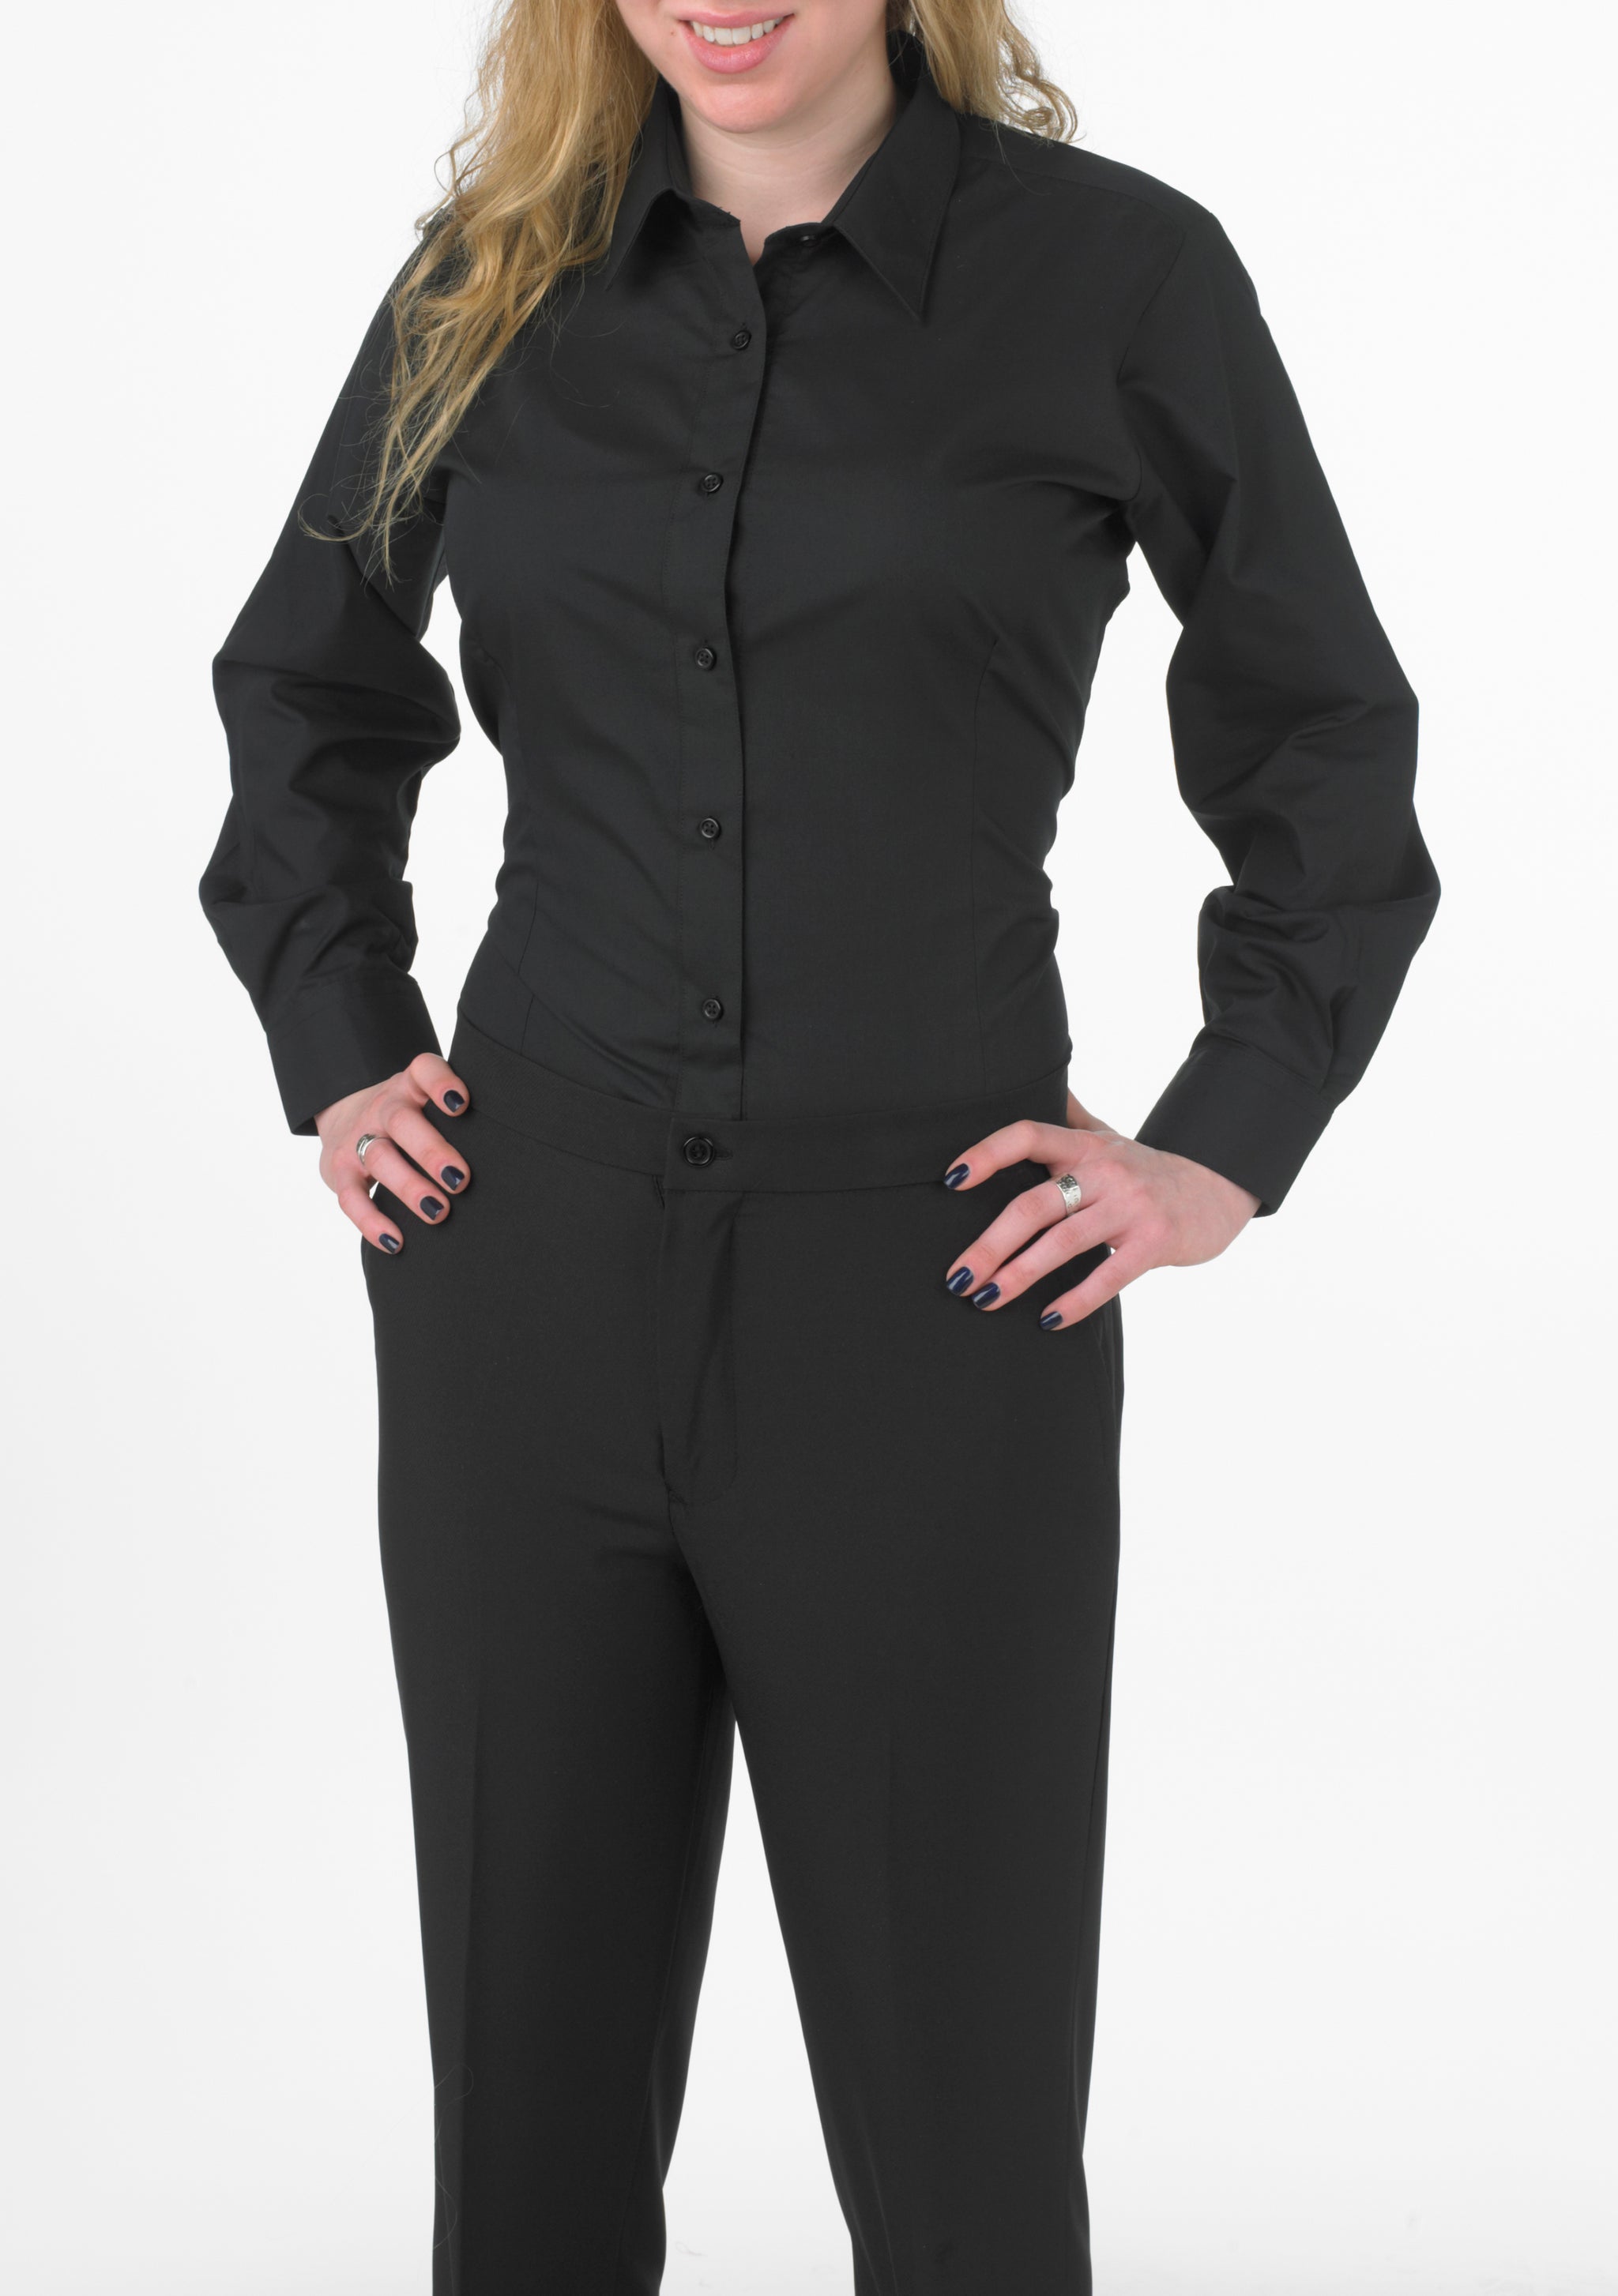 Women's Black, Long-Sleeve Form-Fitted Dress Shirt - 99tux